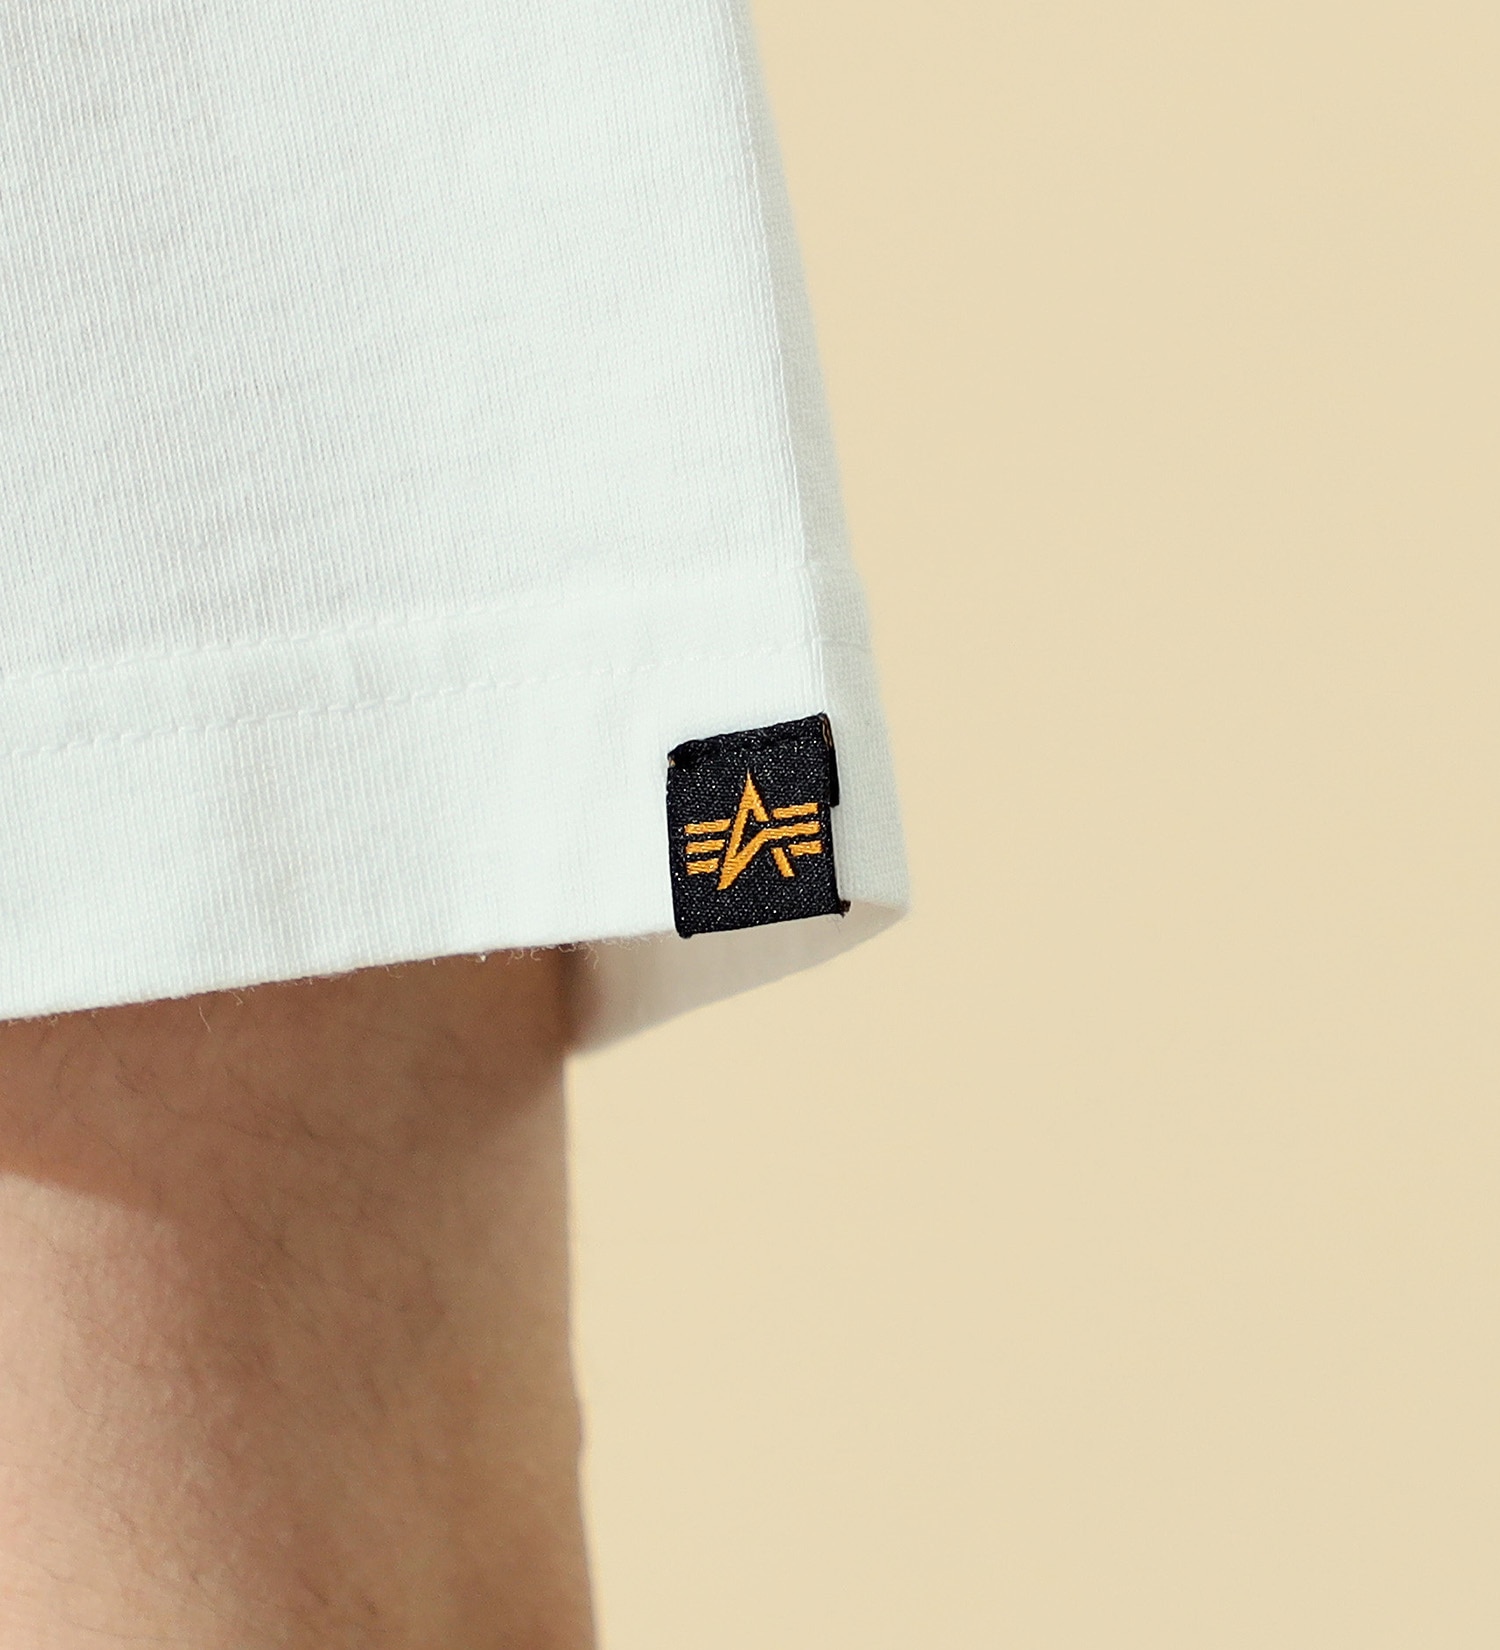 ALPHA(アルファ)のAマークロゴプリントTシャツ 半袖|トップス/Tシャツ/カットソー/メンズ|ホワイト